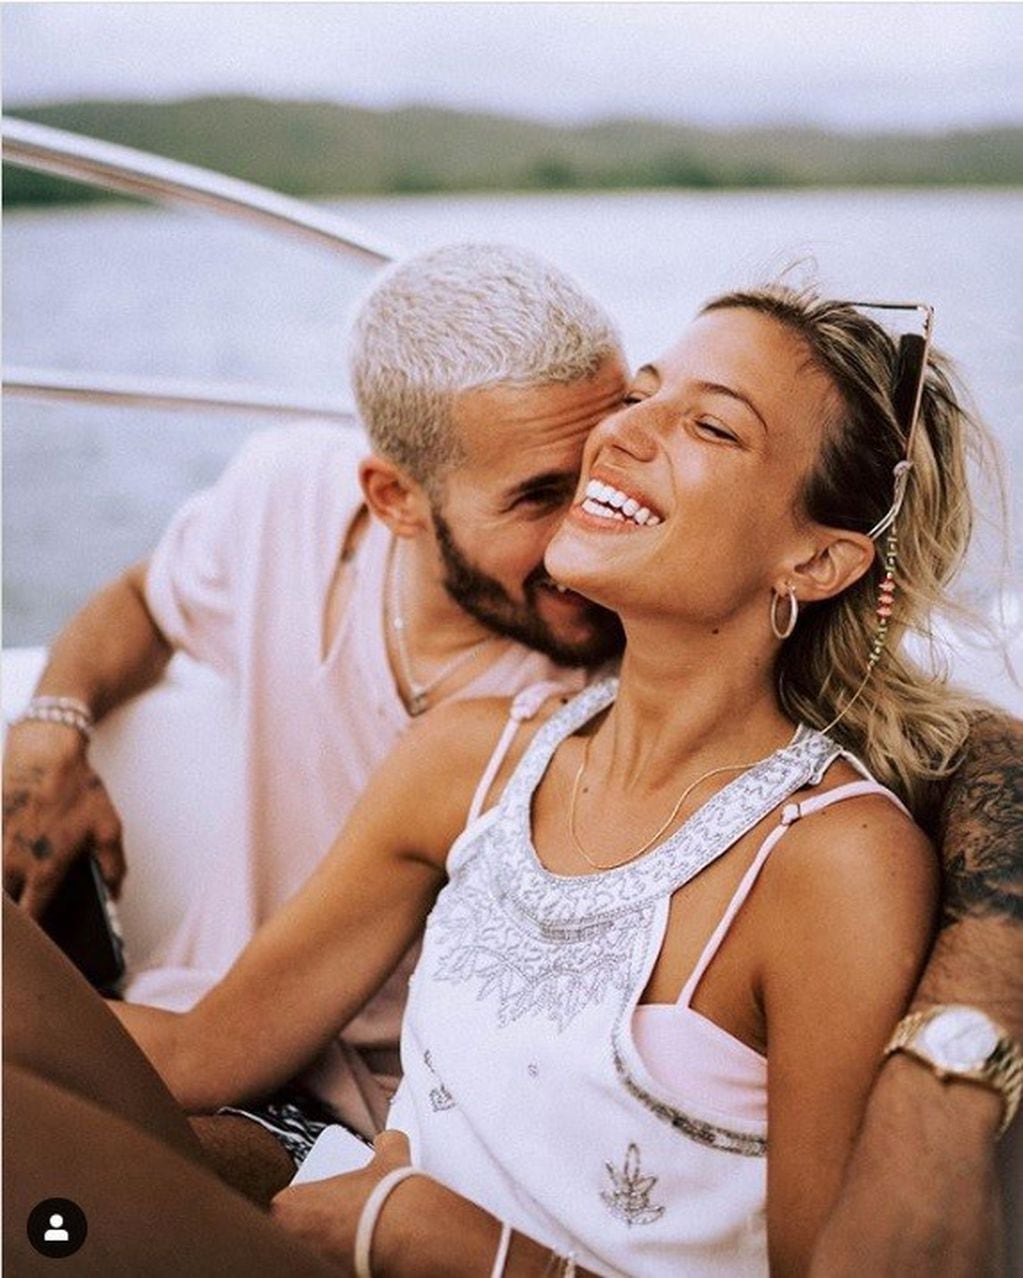 La pareja se ve feliz en sus fotos en redes sociales. (Instagram/@steffiroitman)